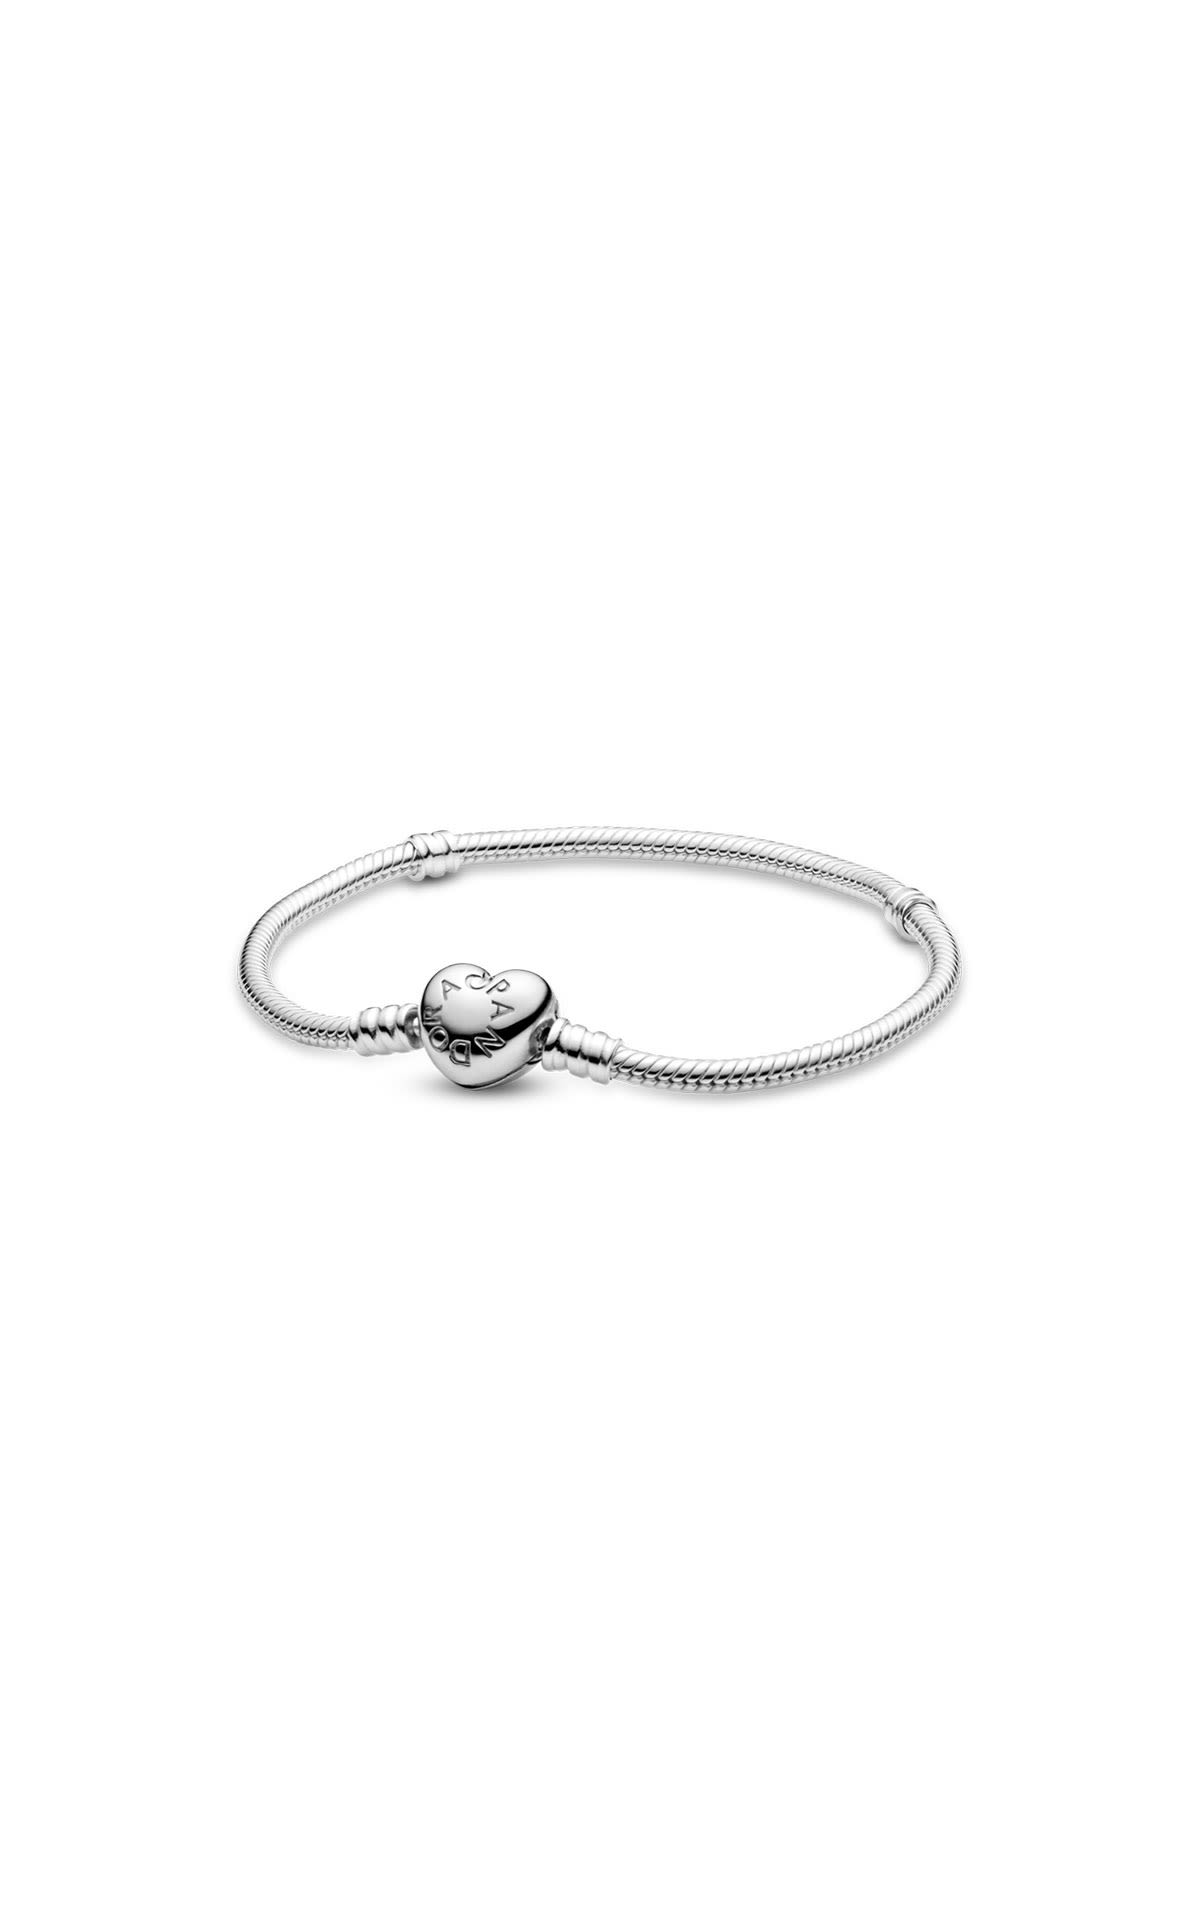 Pandora Sterling silver snake chain bracelet - heart clasp from Bicester Village